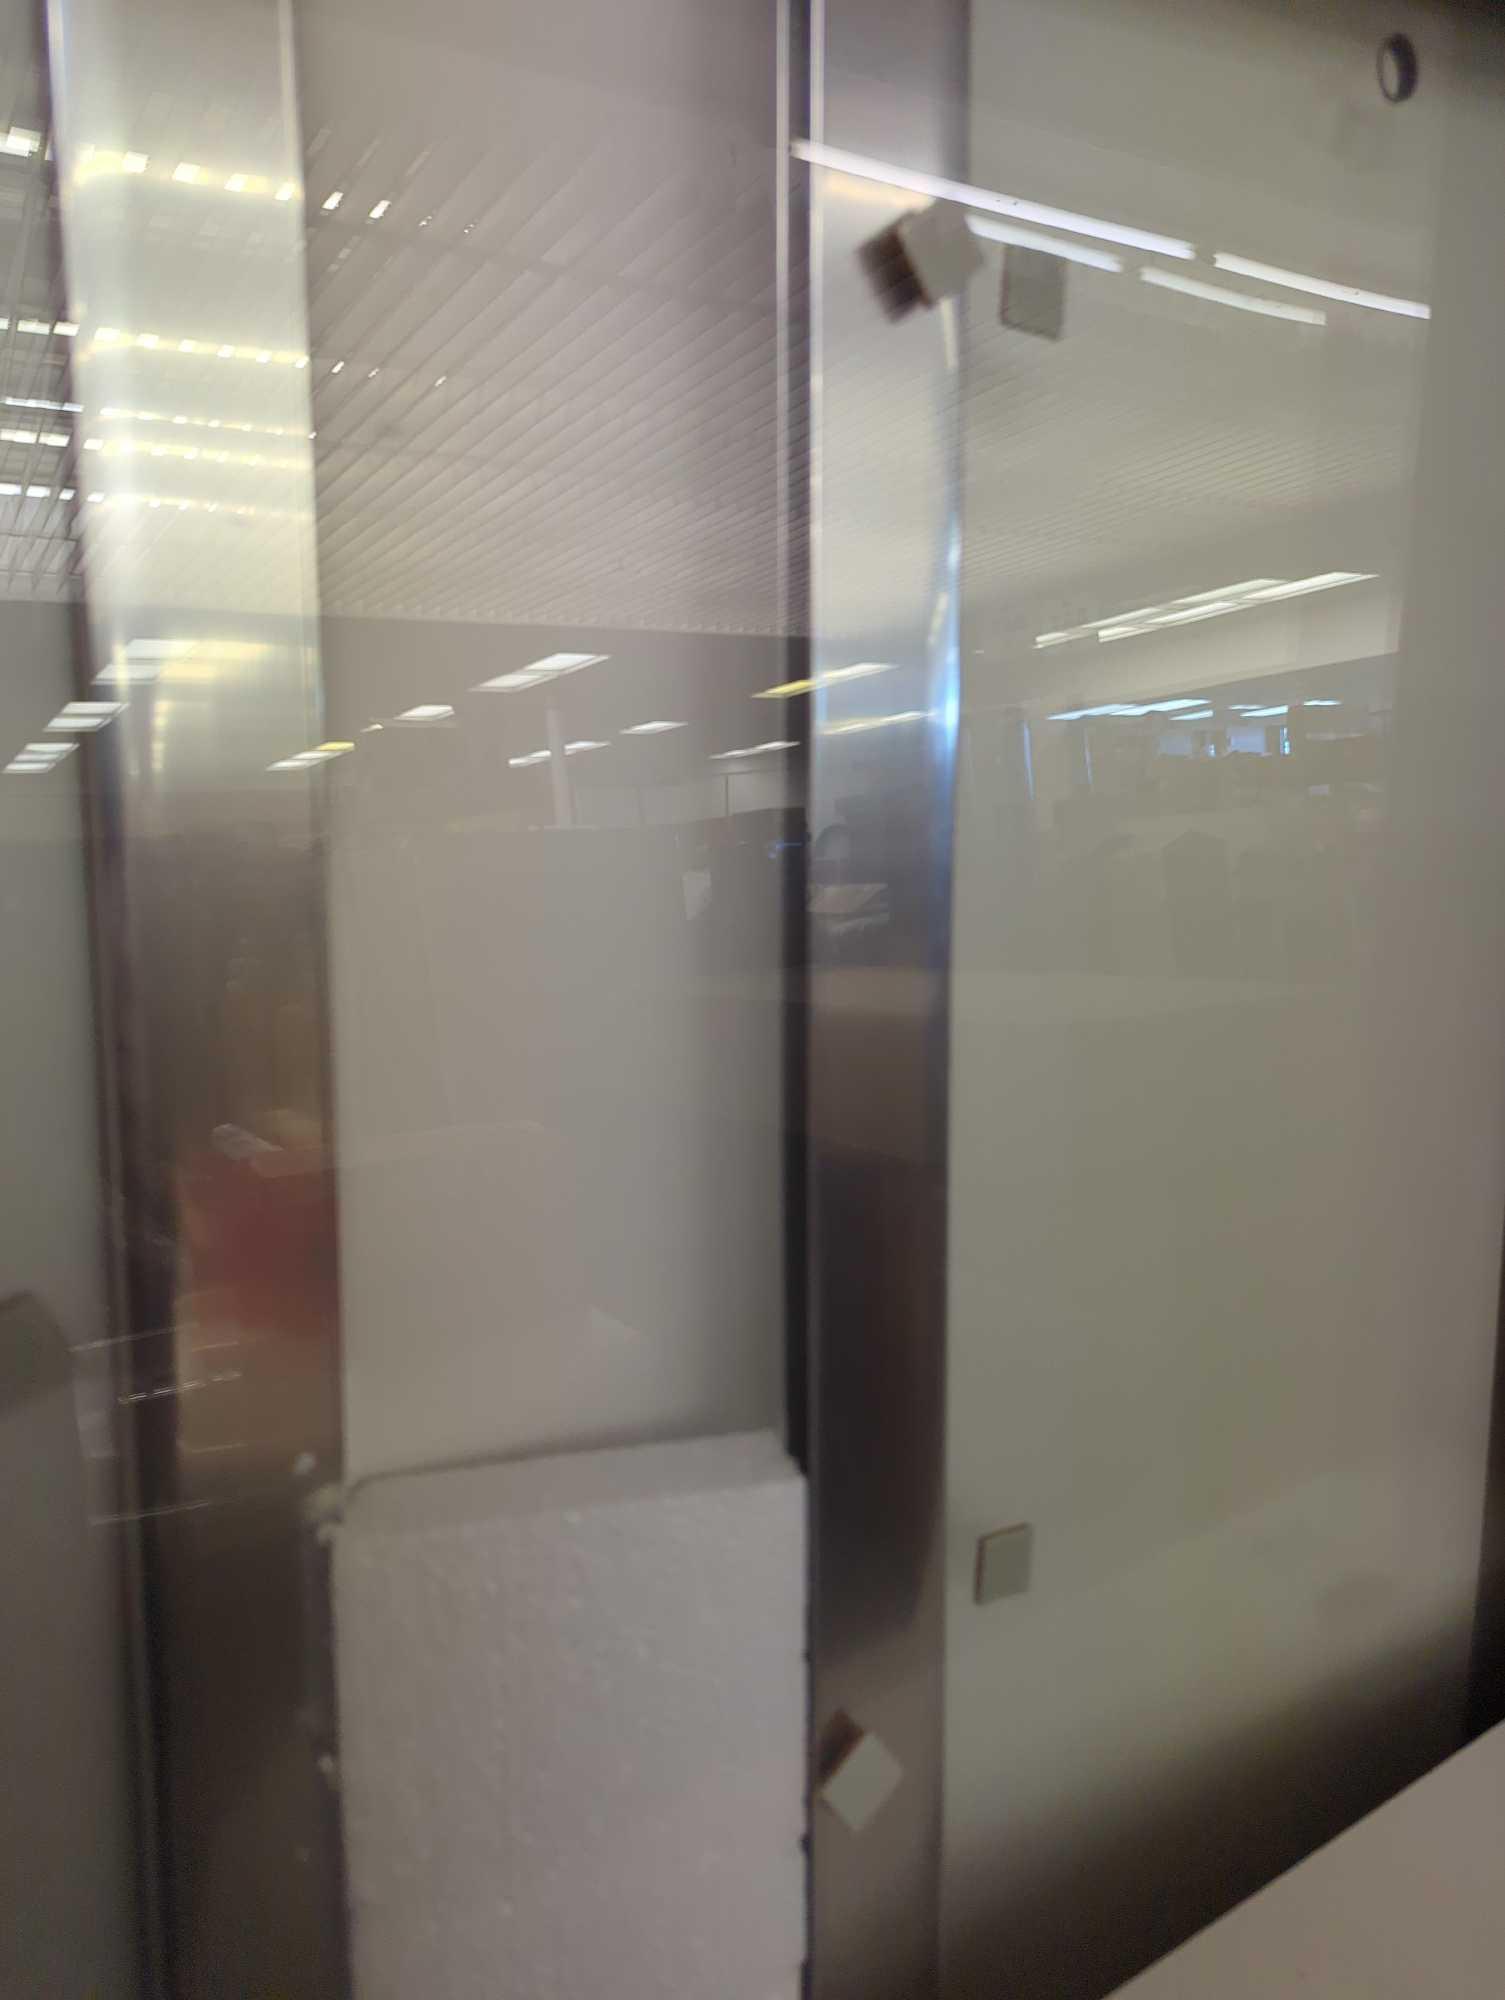 MAAX Daylight 36 in. x 36 in. x 72 in. Center Drain Corner Shower Kit in White with Frameless Door